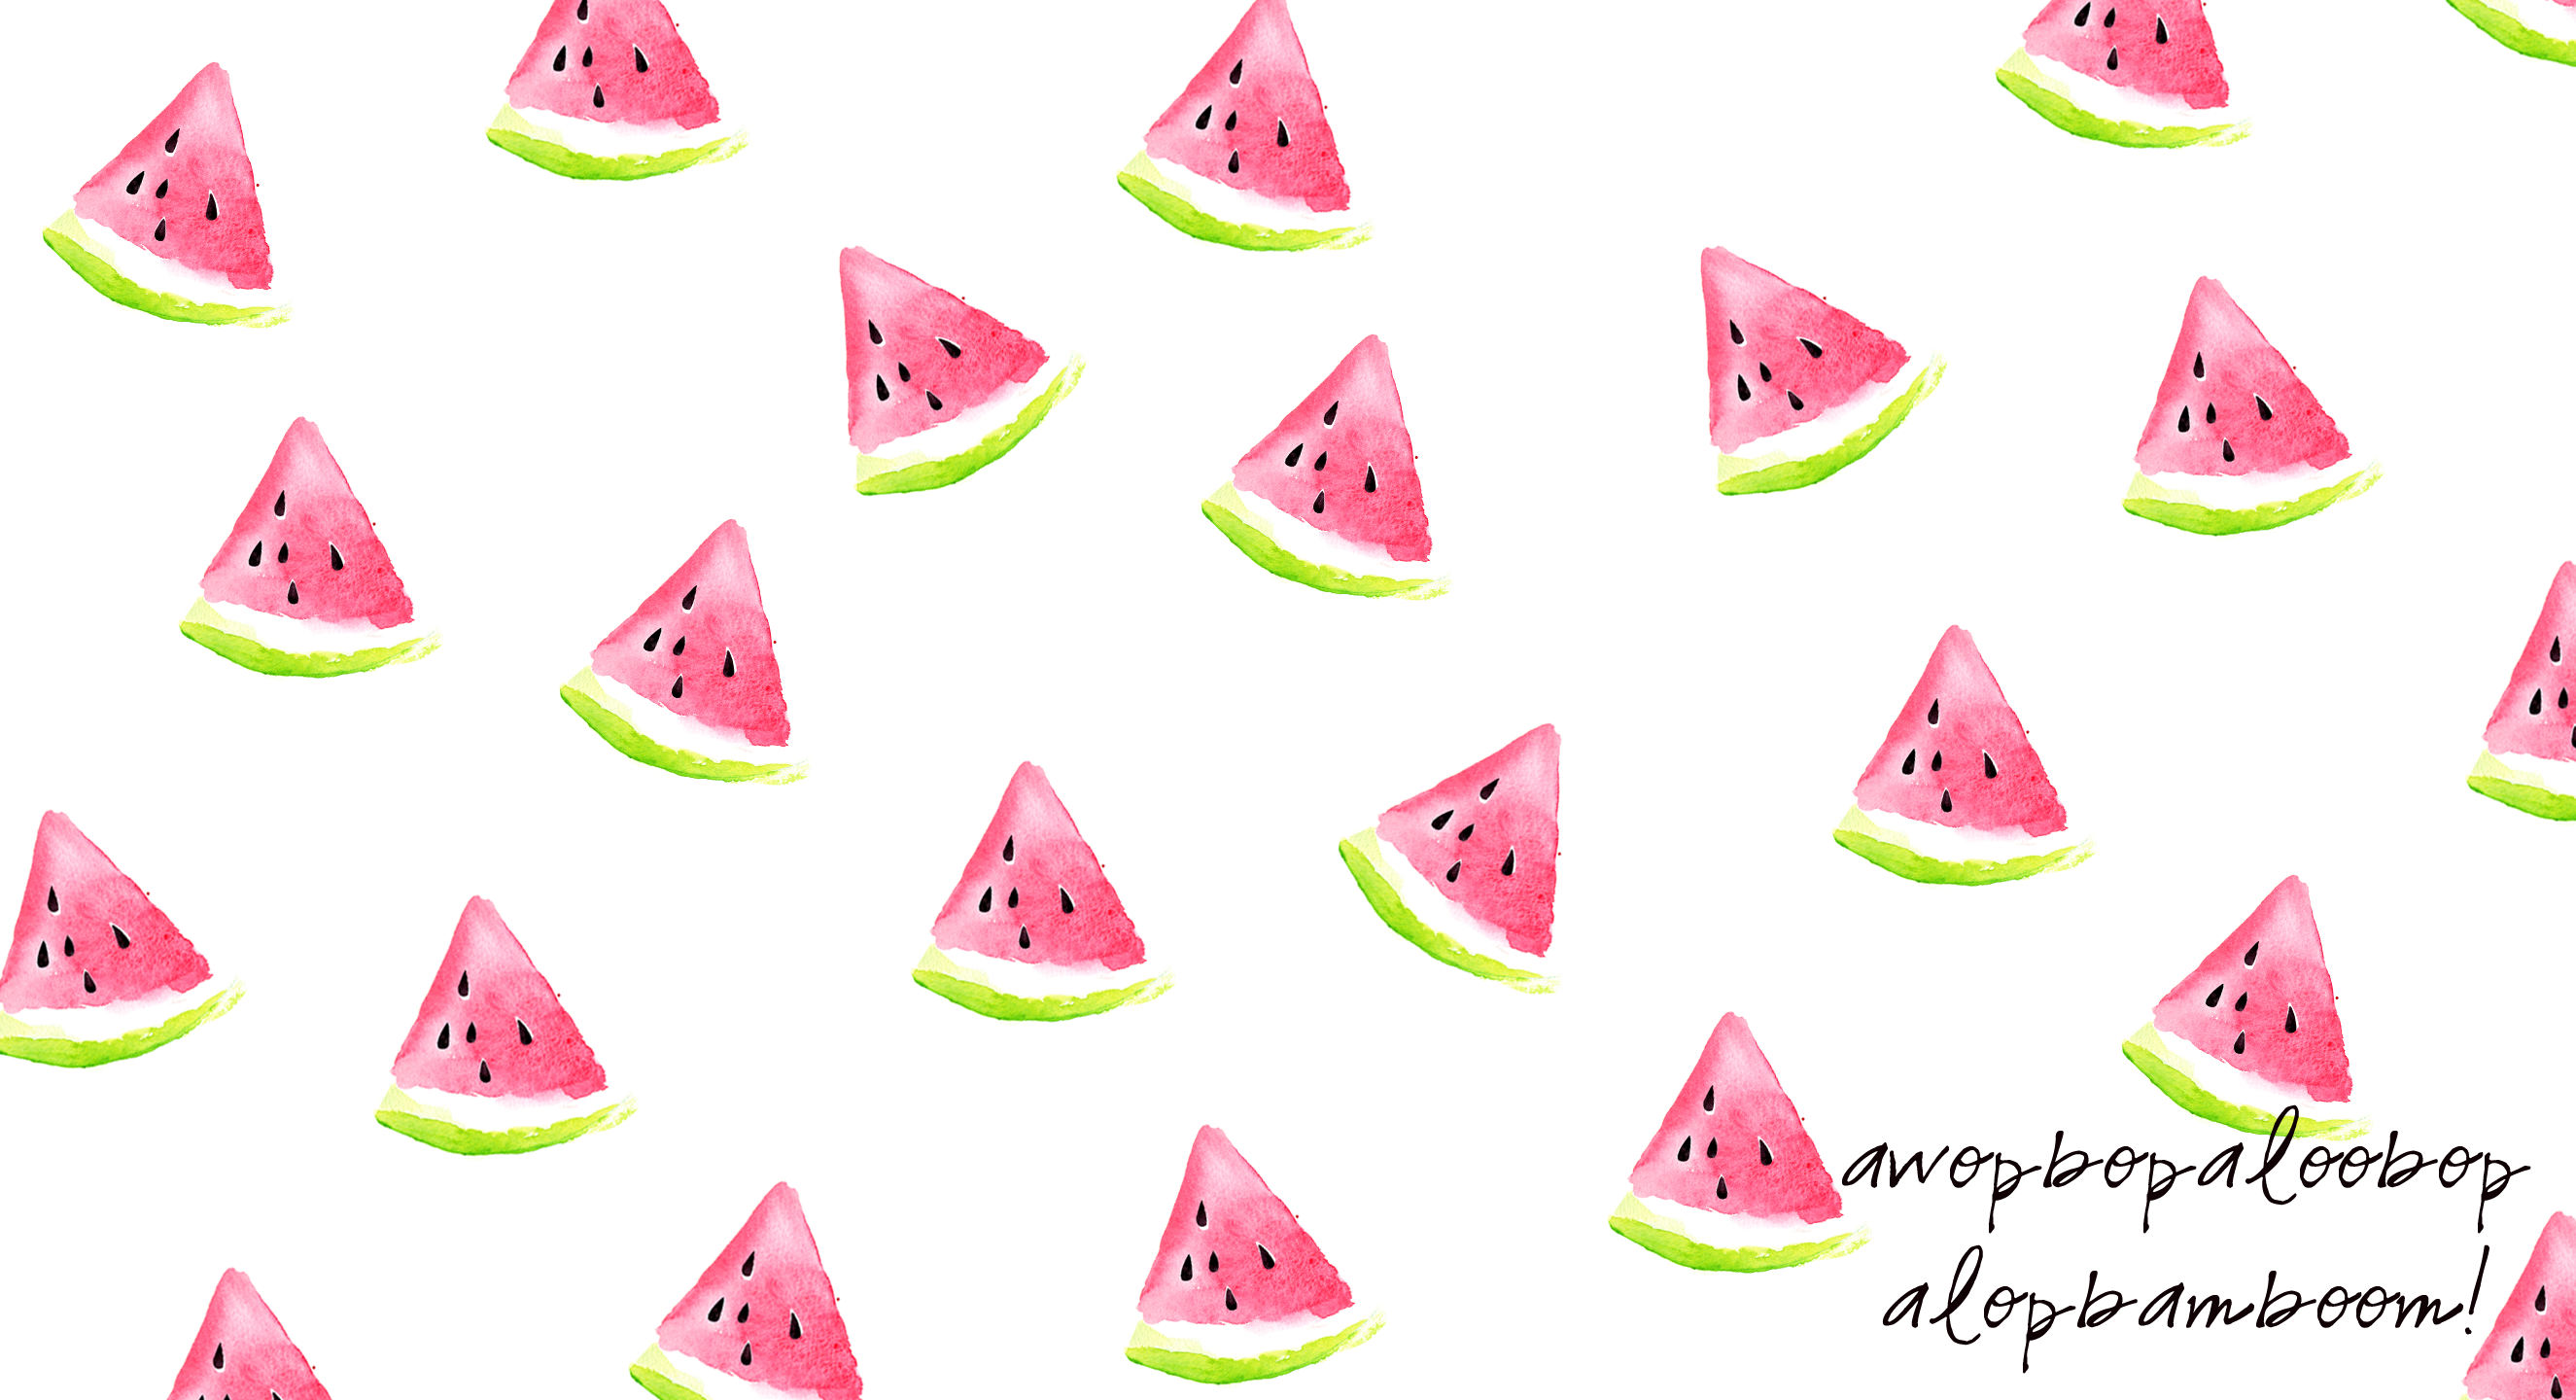 Watermelon Wallpaper For Your iPhone iPad Desktop Katrina Chambers